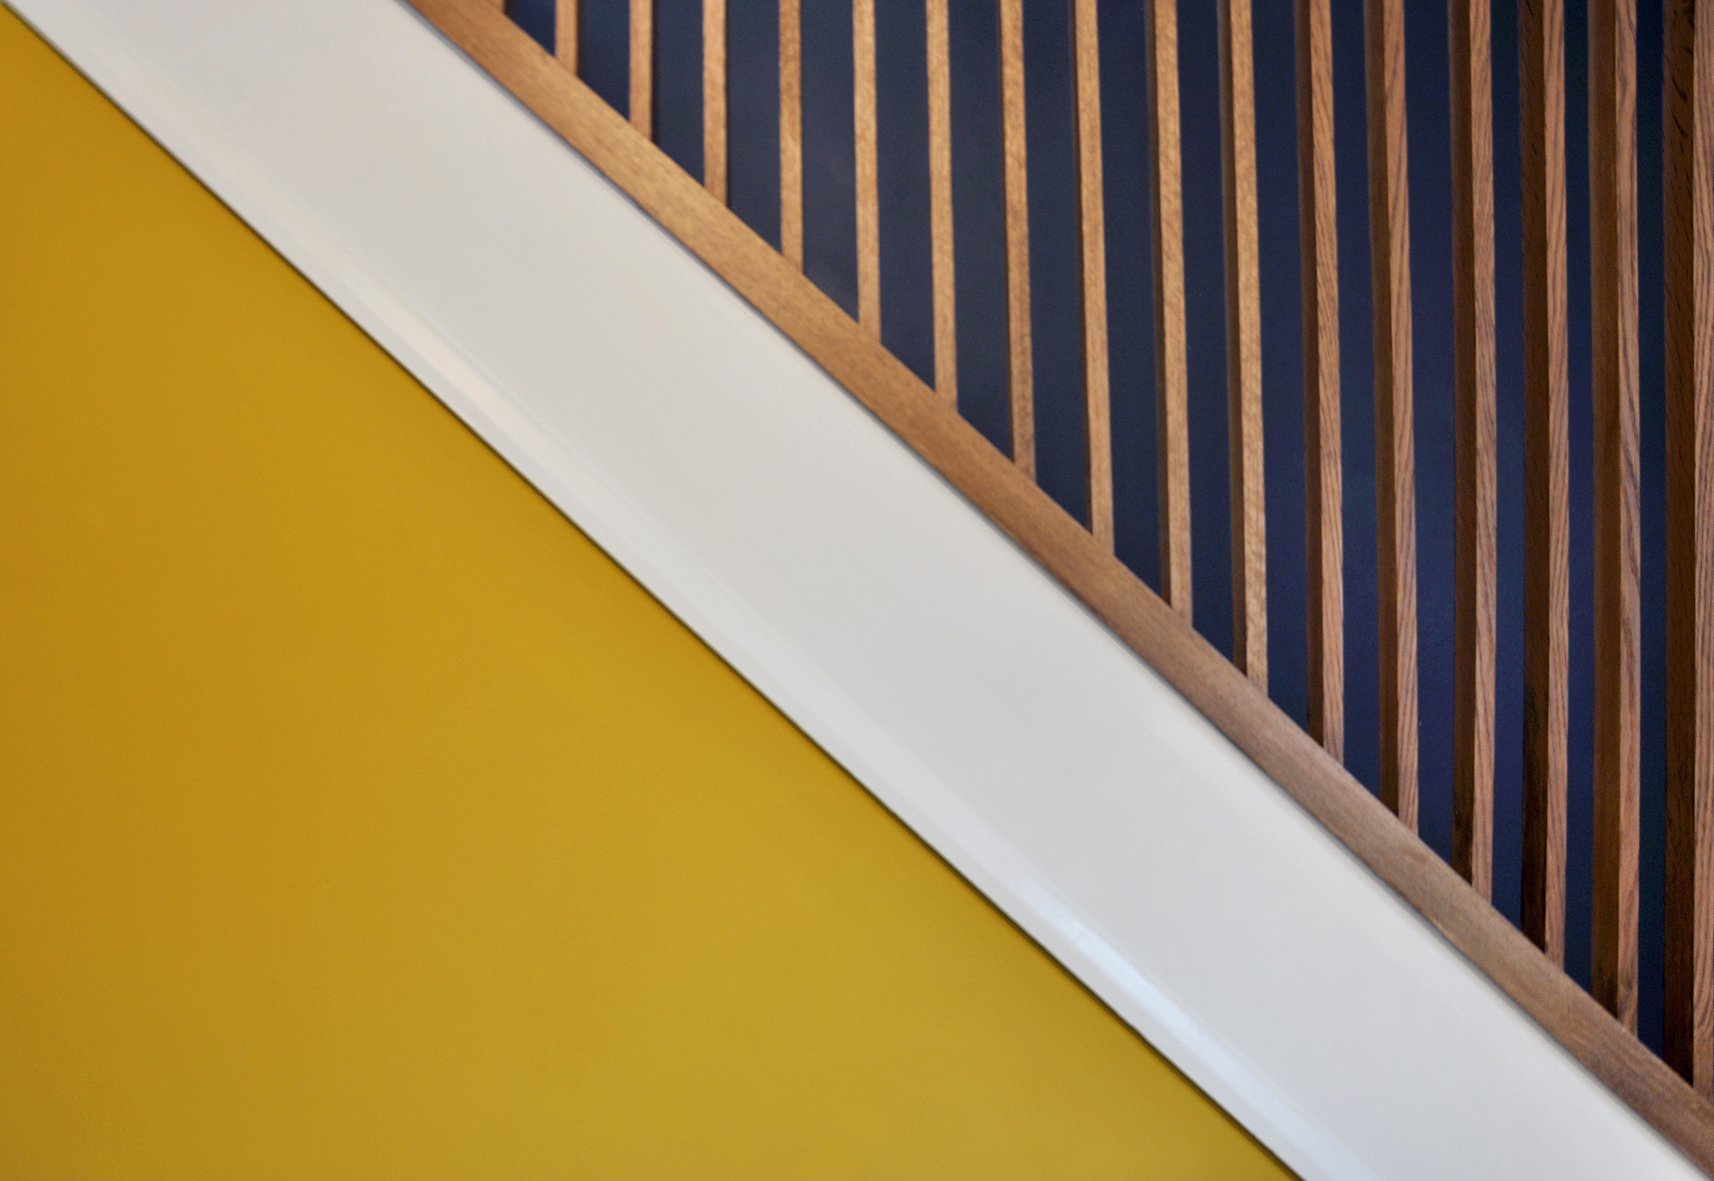 CharlotteBucciero-Interiors-yellow-wall-staircase-oak-beam-details.jpg